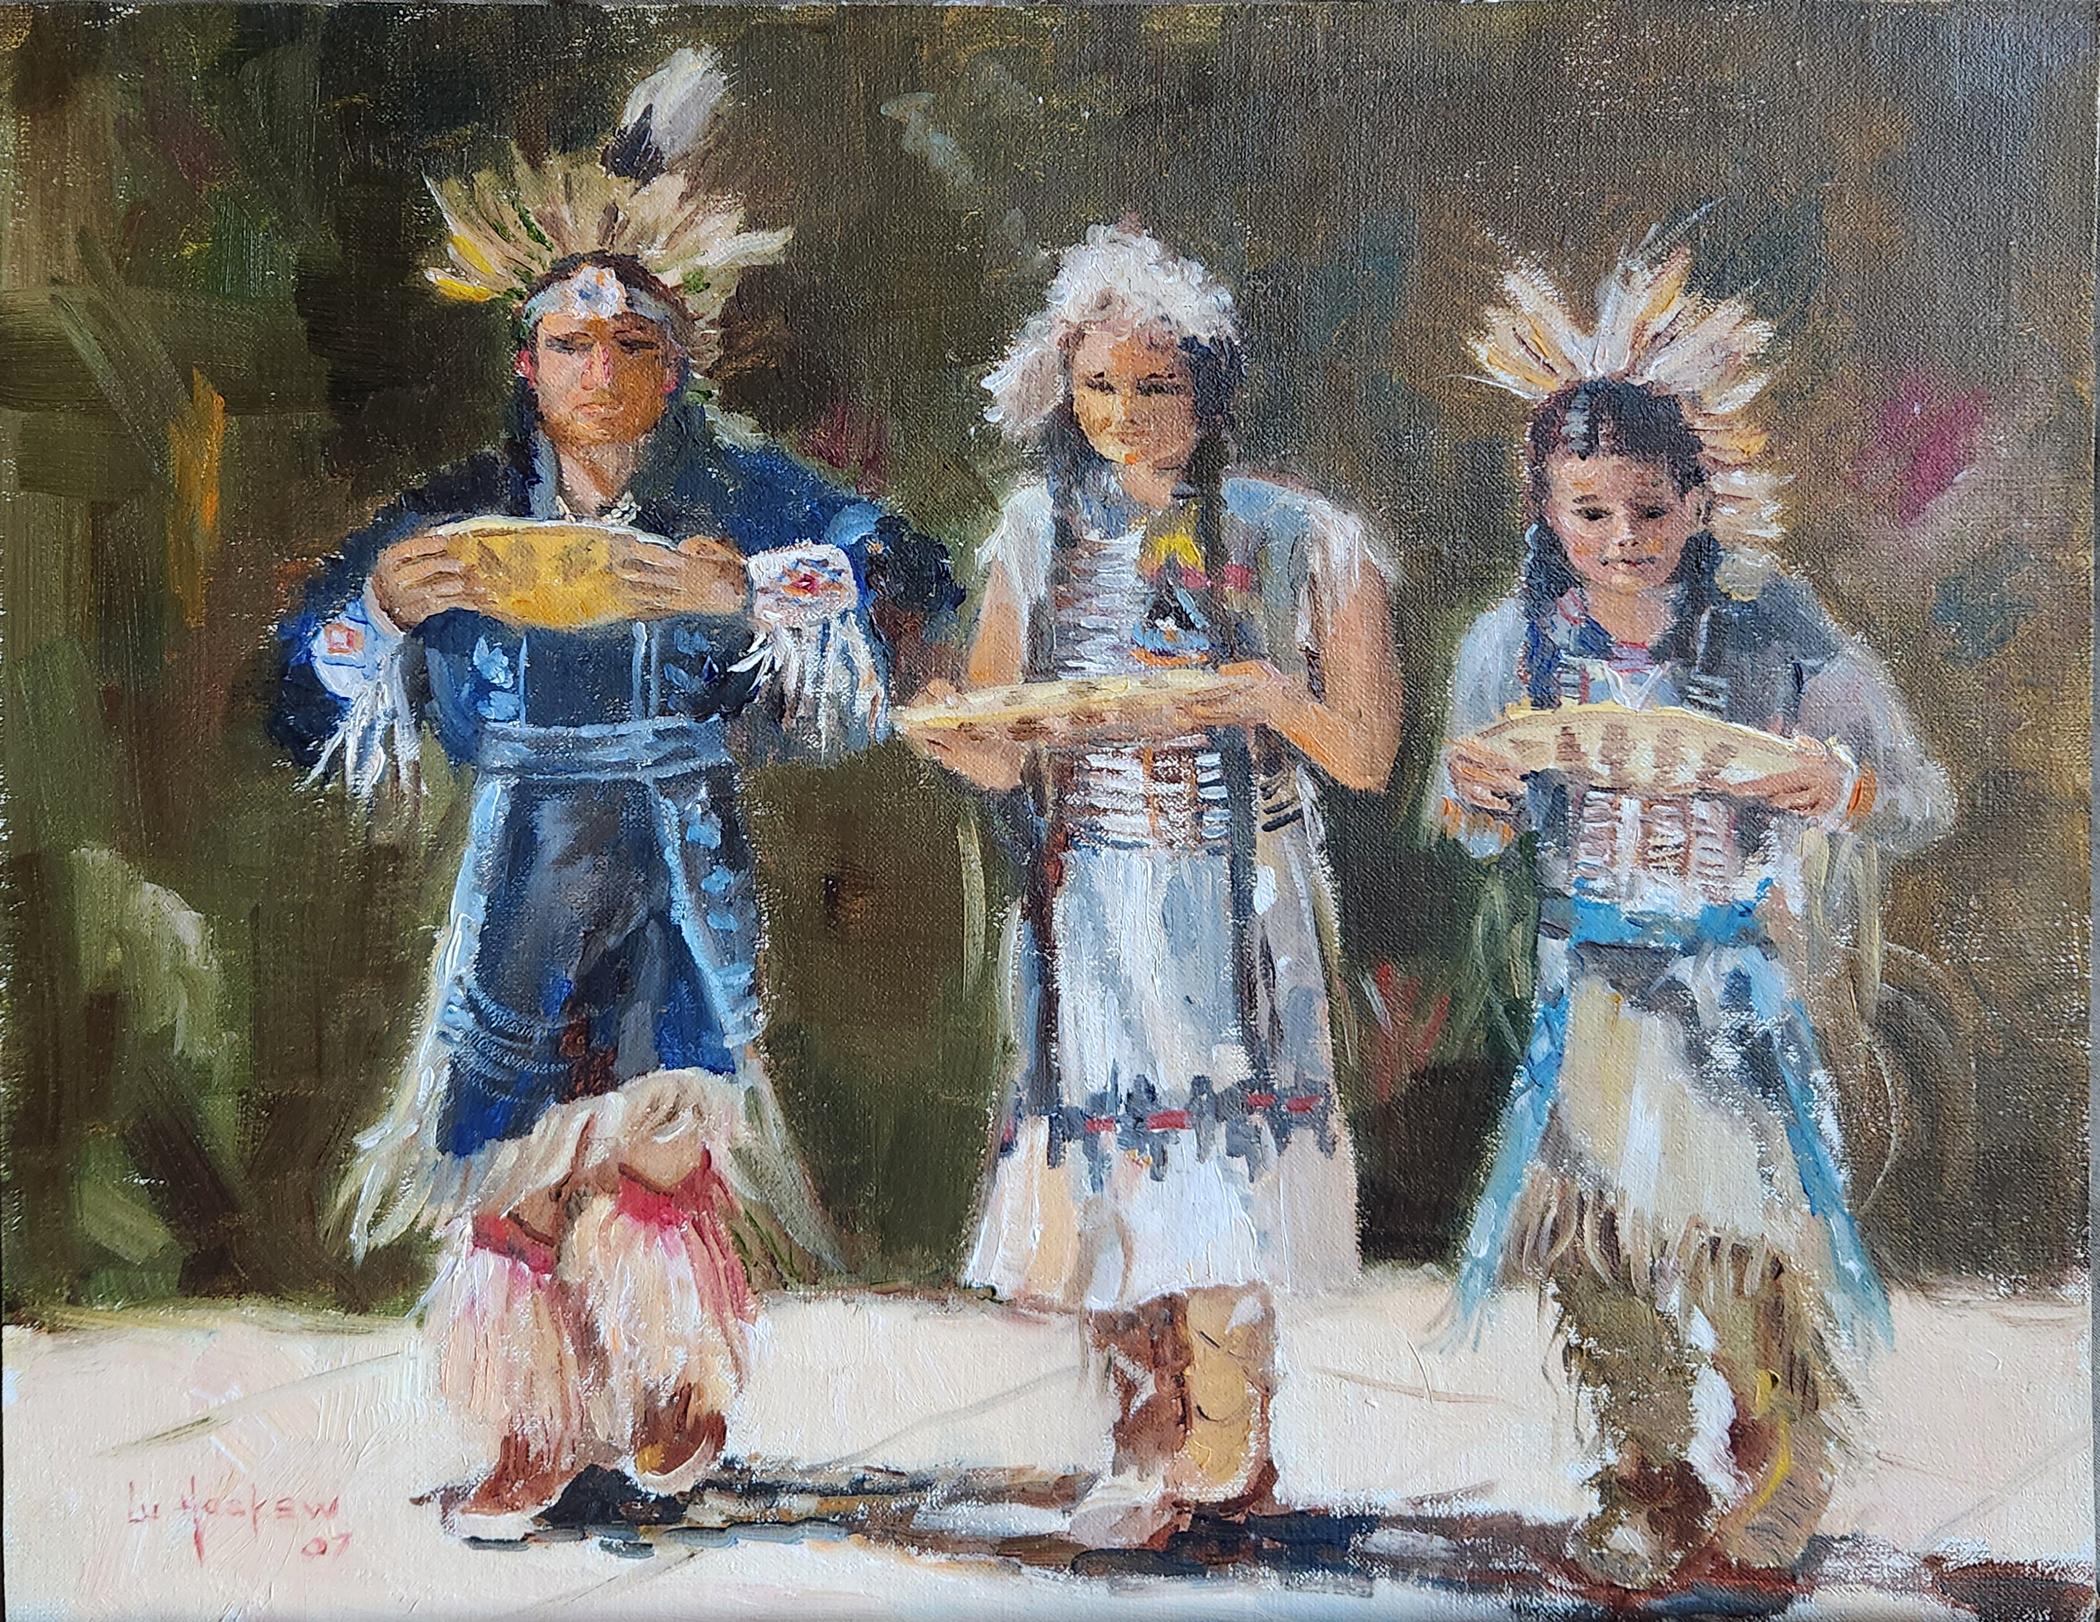 Lu Haskew Figurative Painting - Corn Offering, 10x12" oil on board